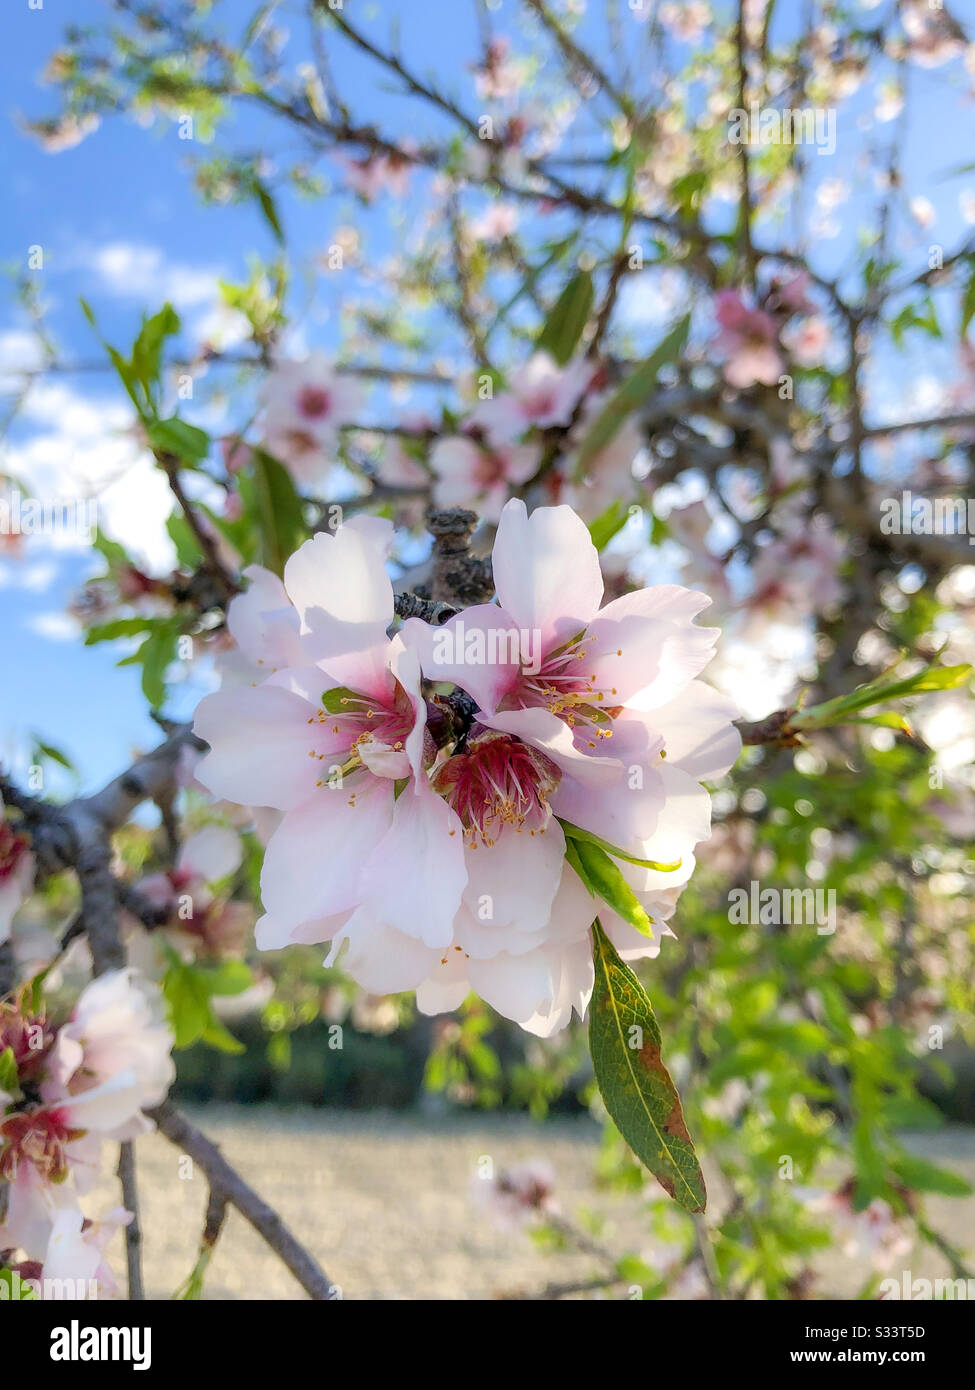 Almond flower on tree close up Stock Photo